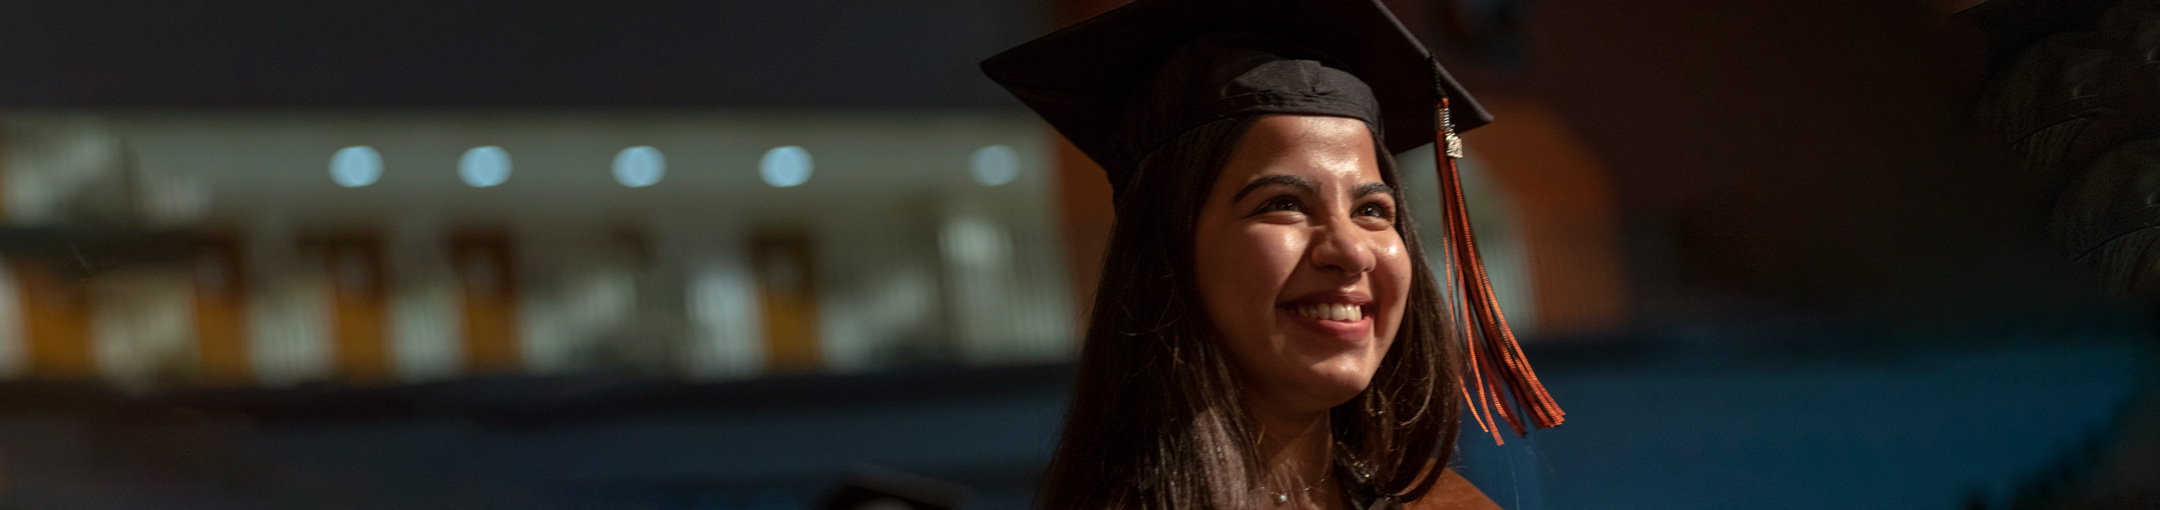 a student wearing a graduation cap smiles